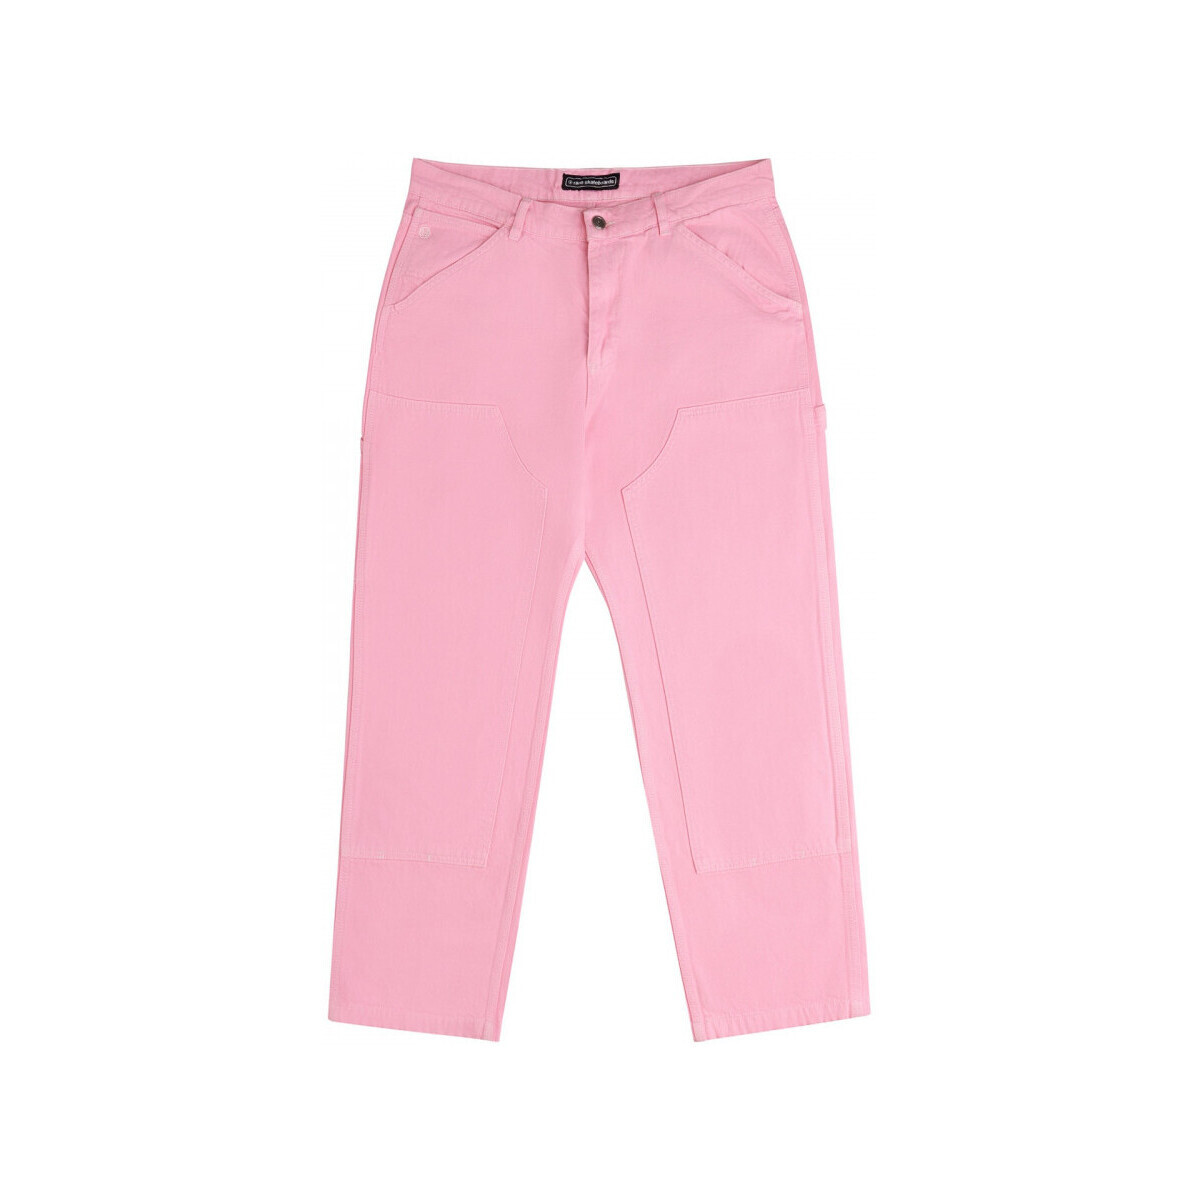 Îmbracaminte Bărbați Pantaloni  Rave John carpenter pant roz